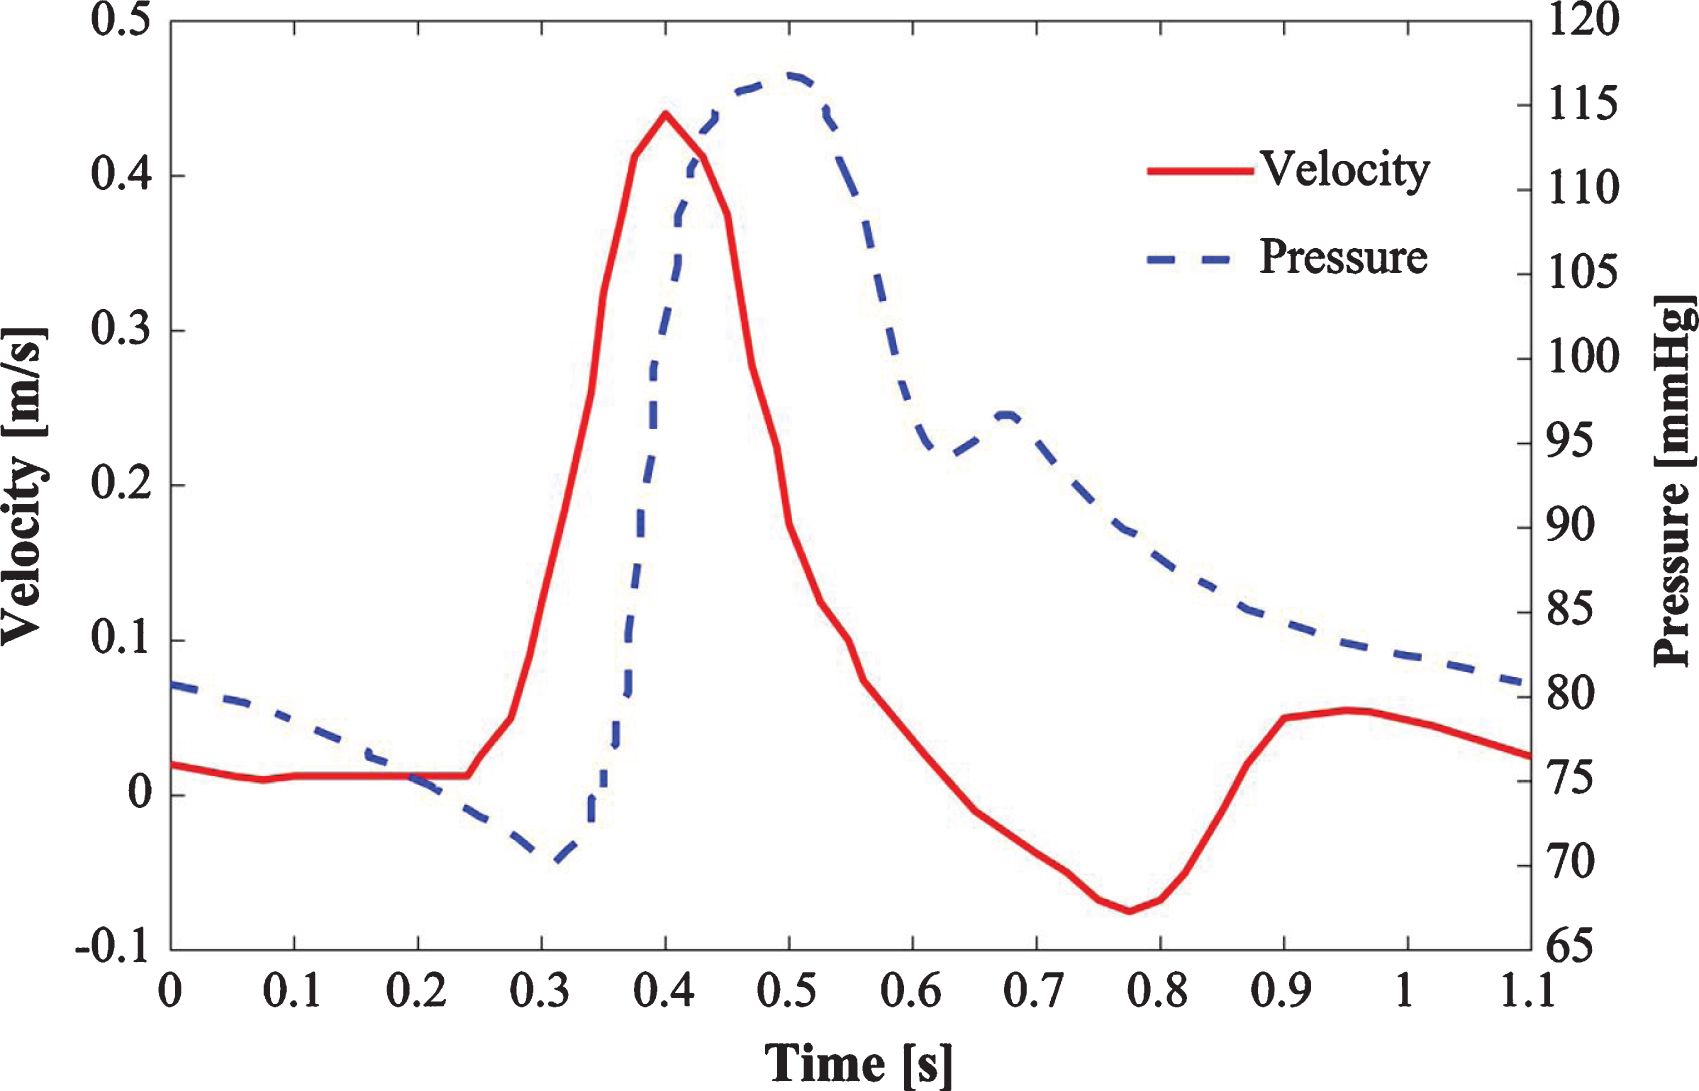 Velocity and pressure waveforms (Mills et al. [34]).